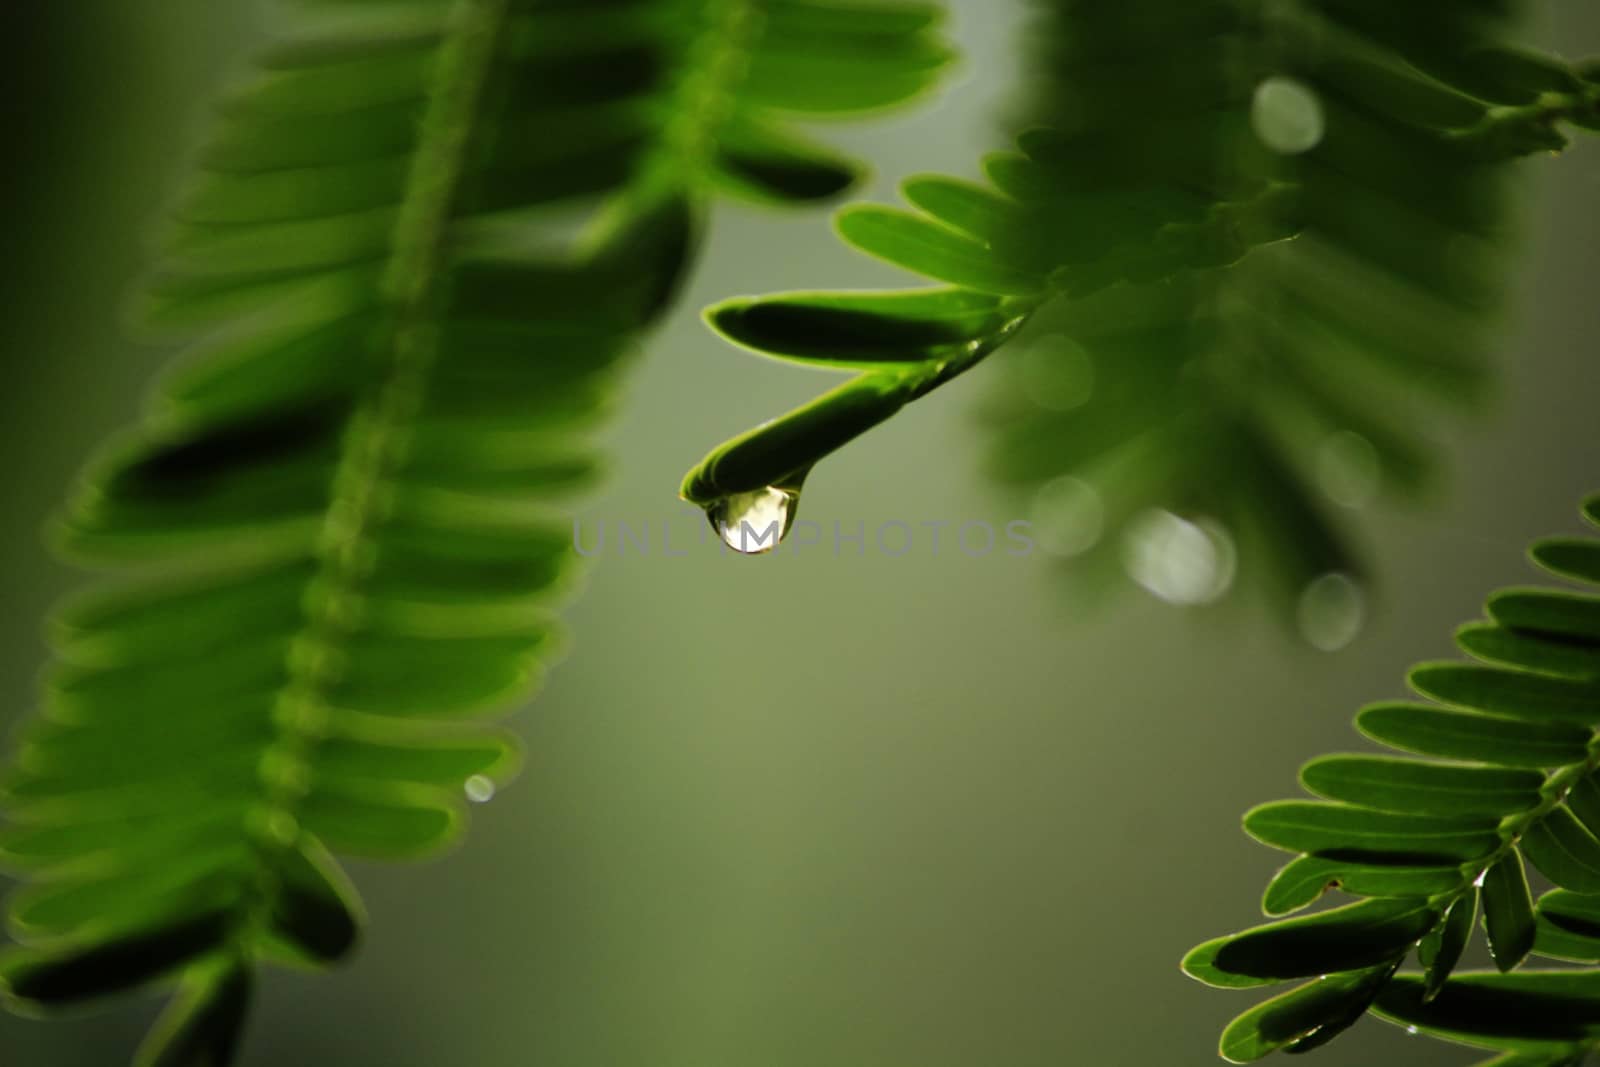 Water drops on leaves in rainy season